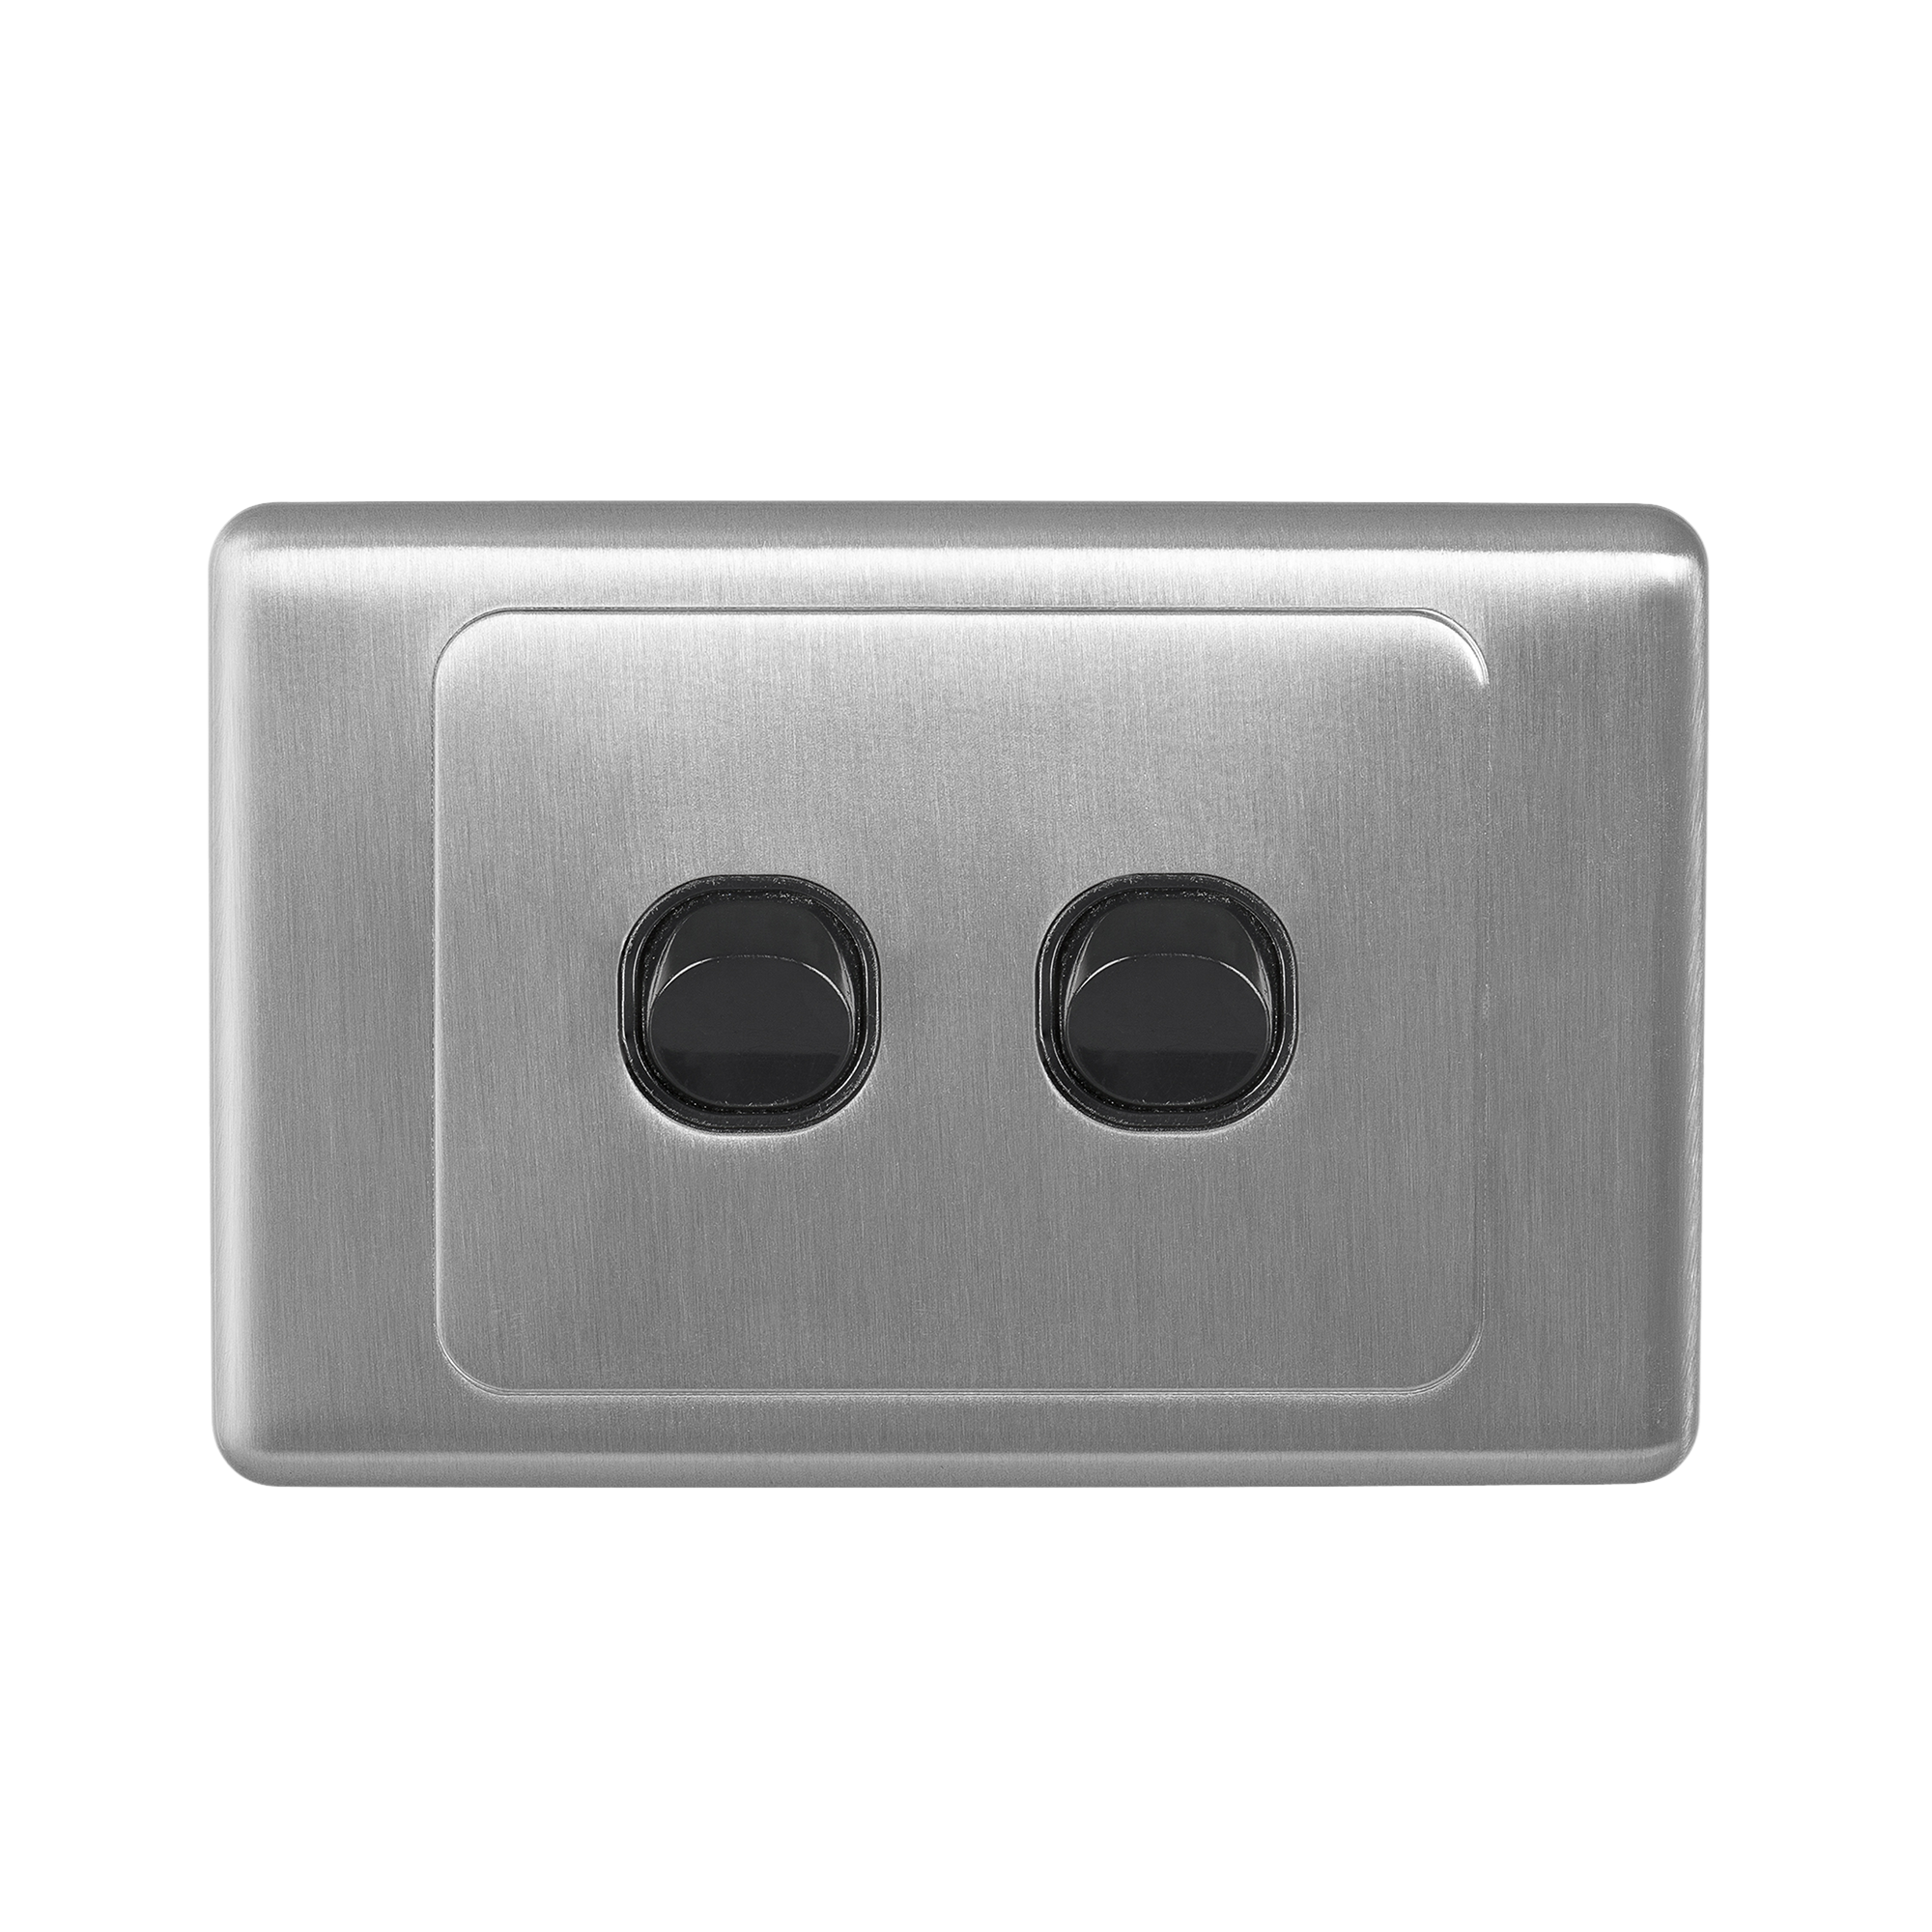  S-line s/steel double switch